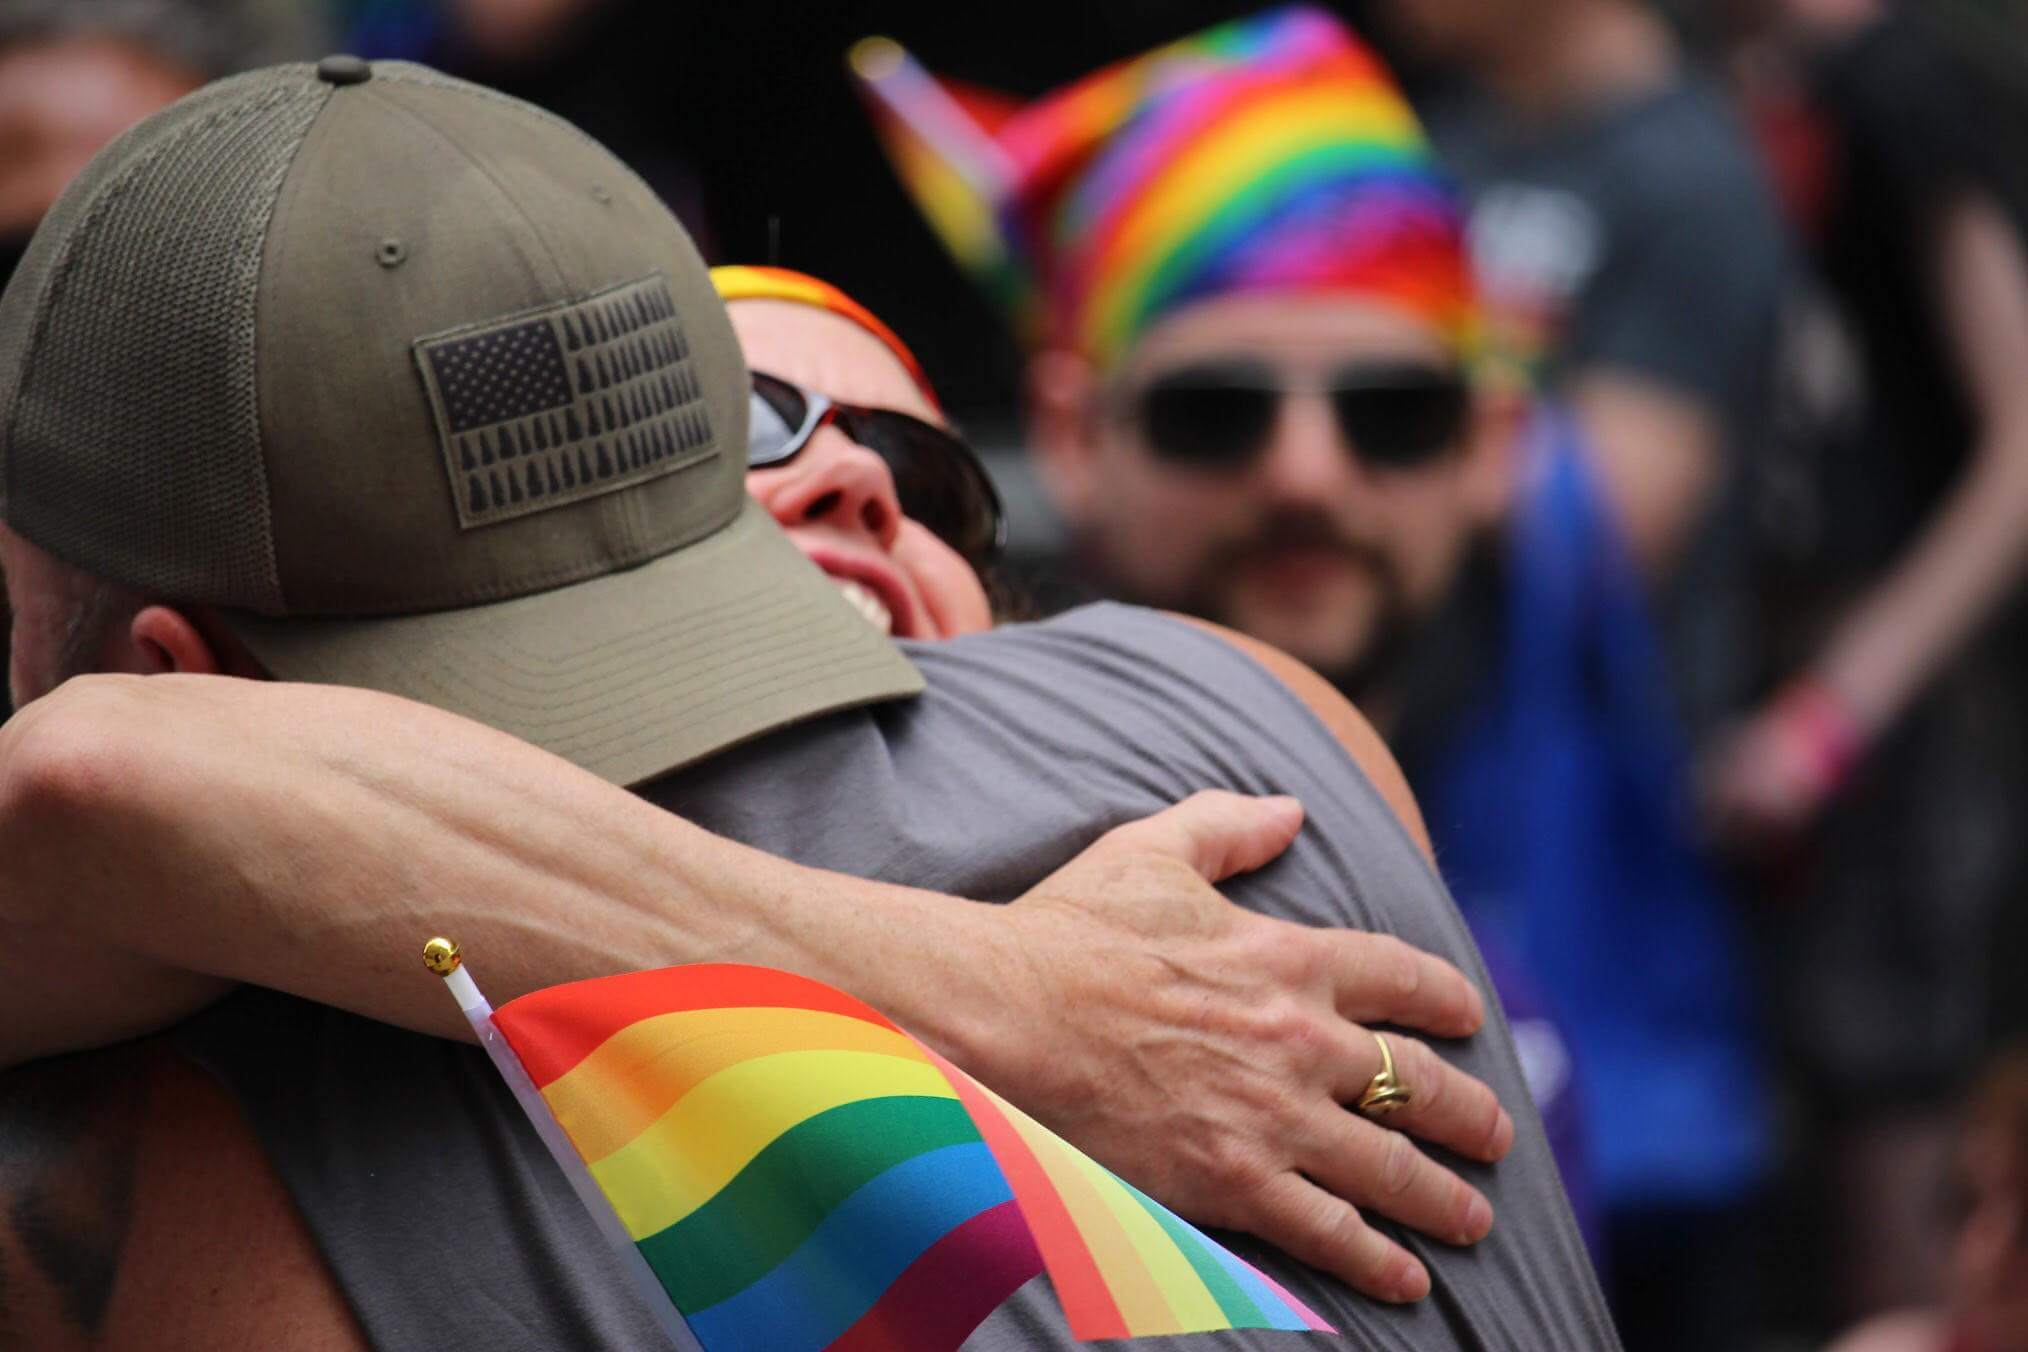 Pride, papà regala abbracci ai ragazzi gay rifiutati dai propri genitori - gay pride abbraccio papa%CC%80 2 - Gay.it